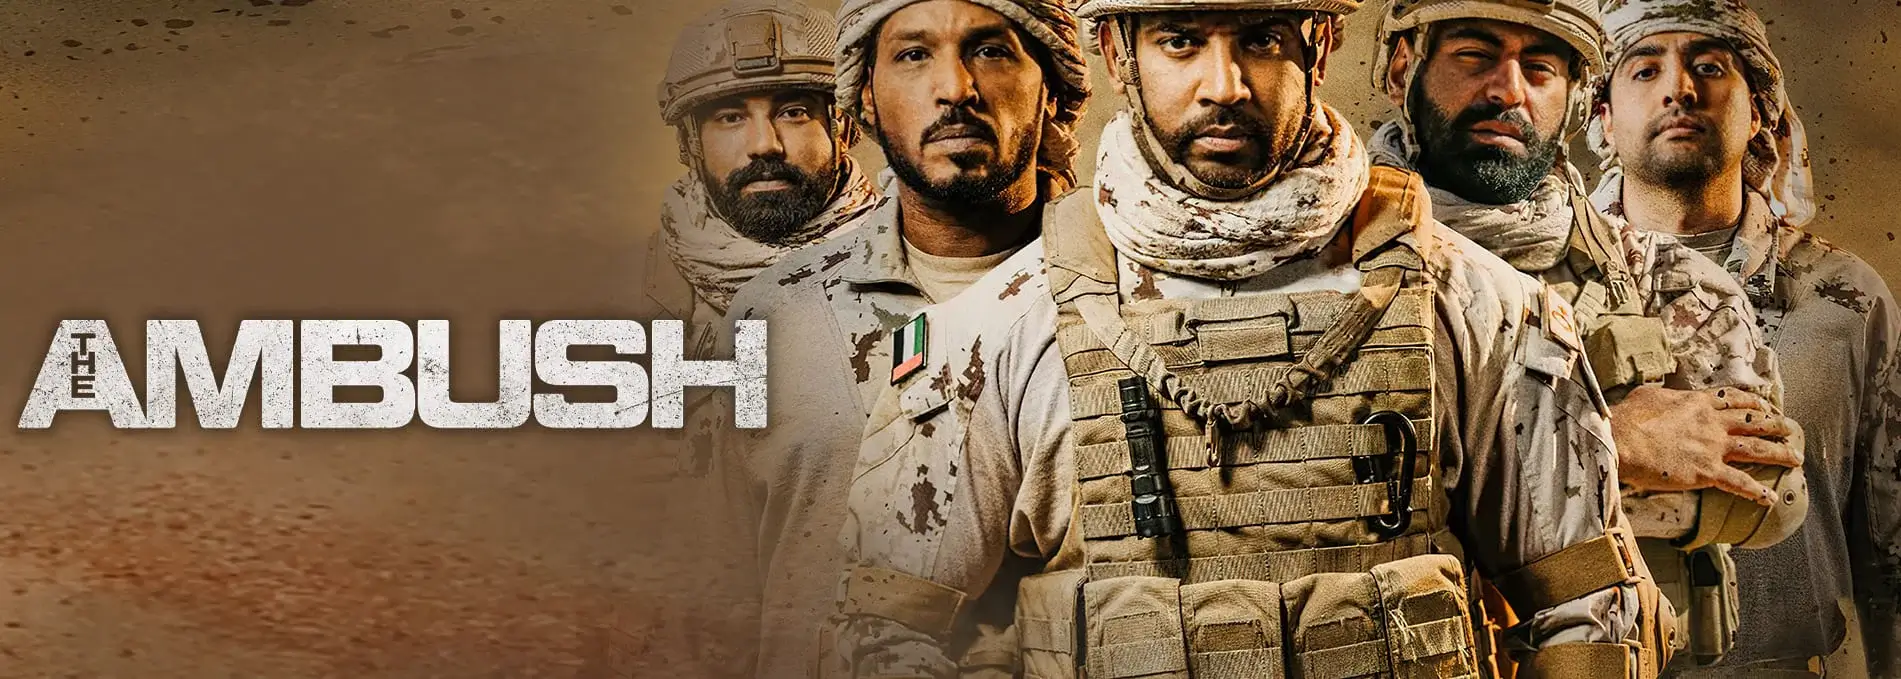 The Ambush 4K 2021 ARABIC big poster